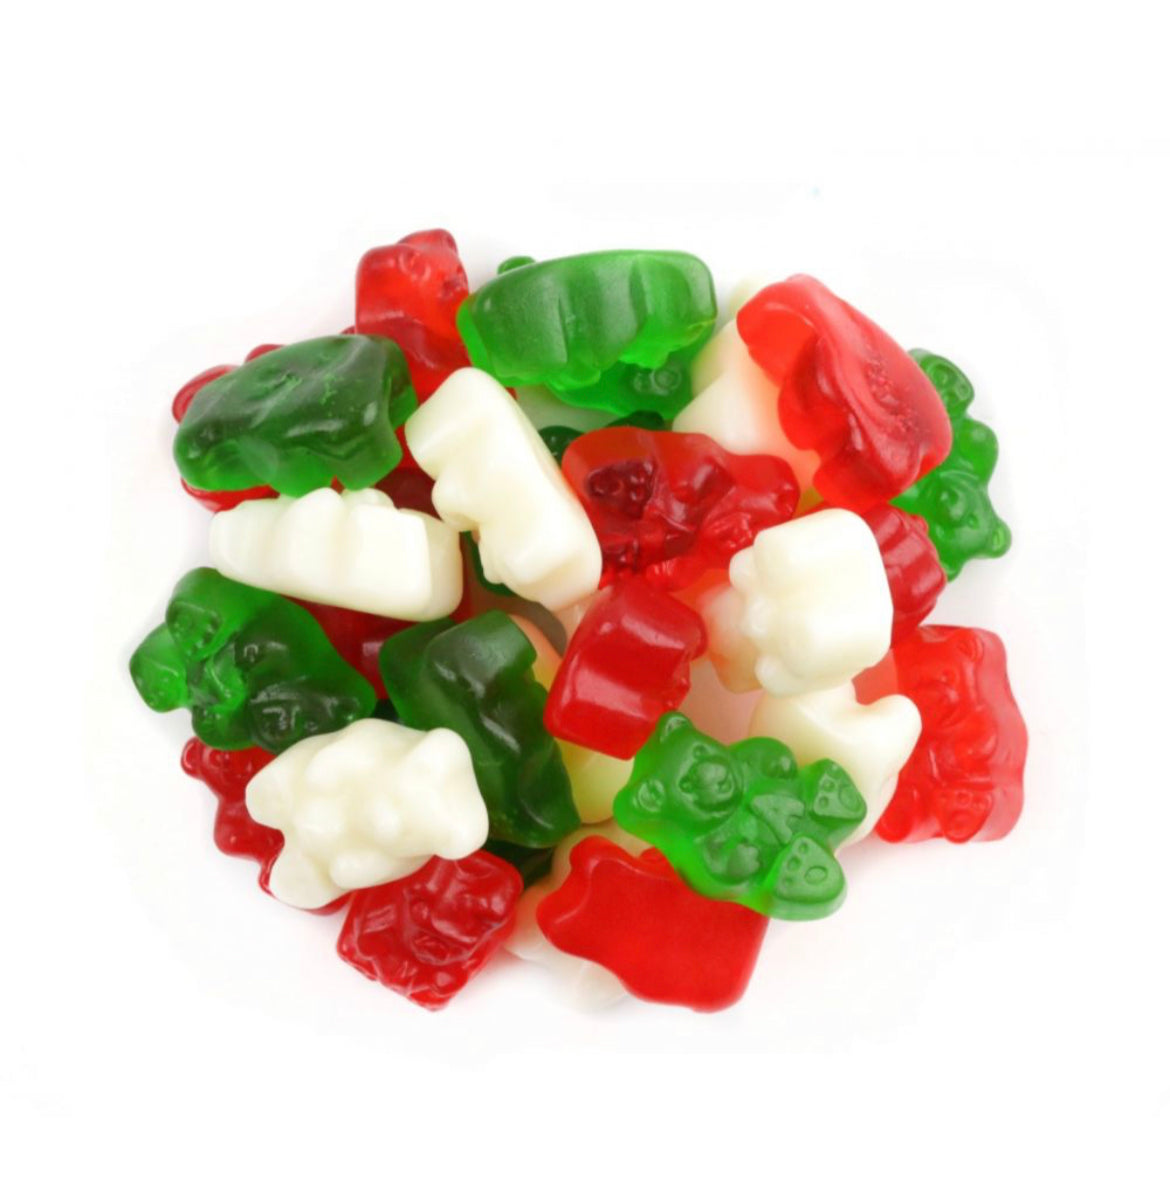 Gummi Bears - Olympia Candy Kitchen